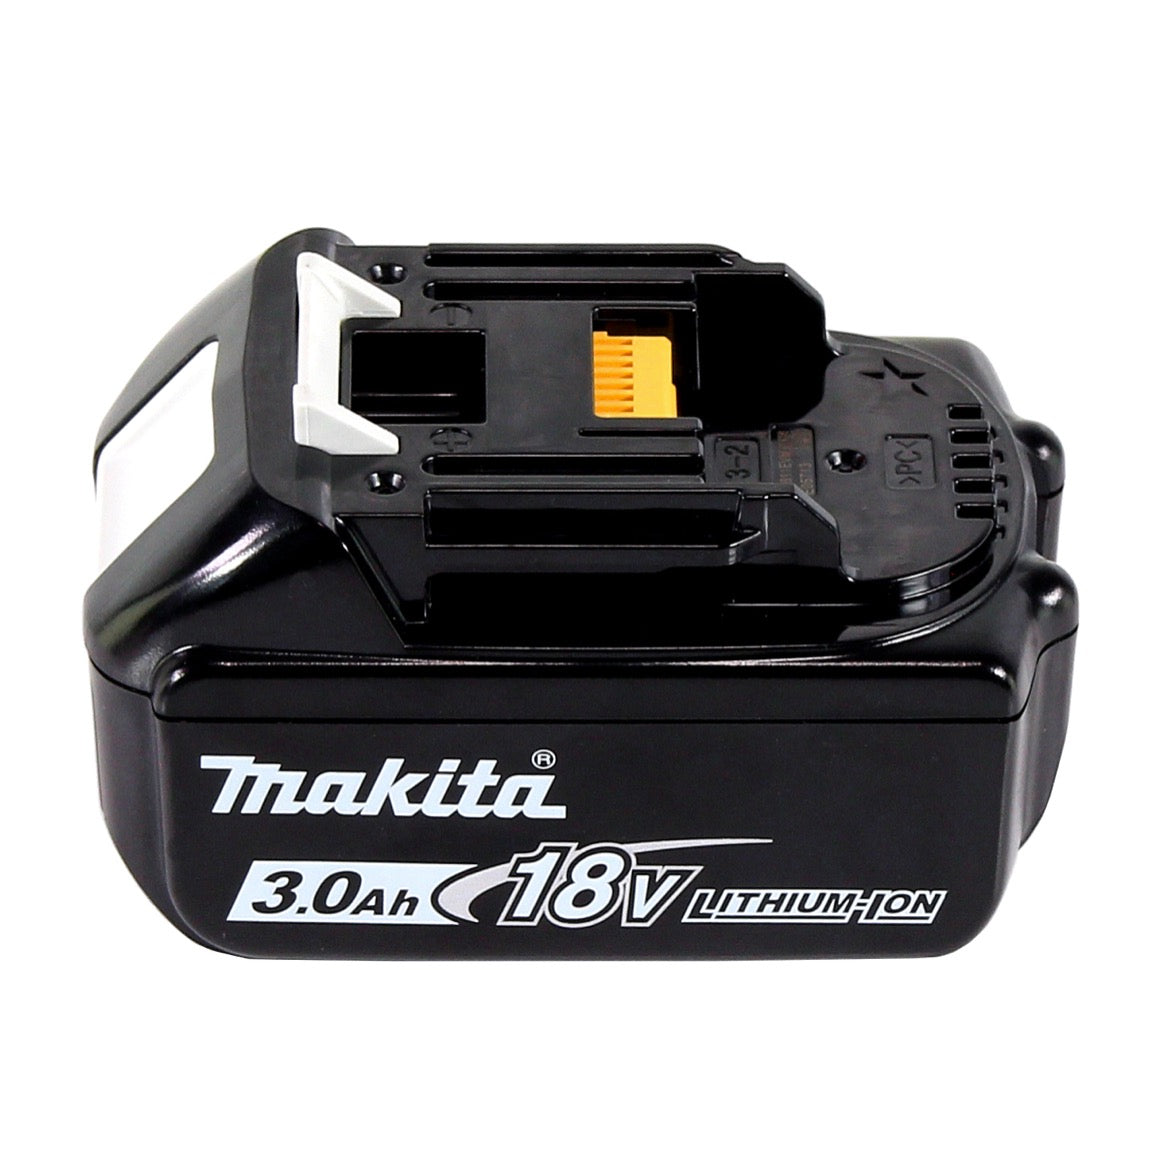 Makita DDF 485 F1J Akku Bohrschrauber 18 V 50 Nm Brushless + 1x Akku 3,0 Ah + Makpac - ohne Ladegerät - Toolbrothers